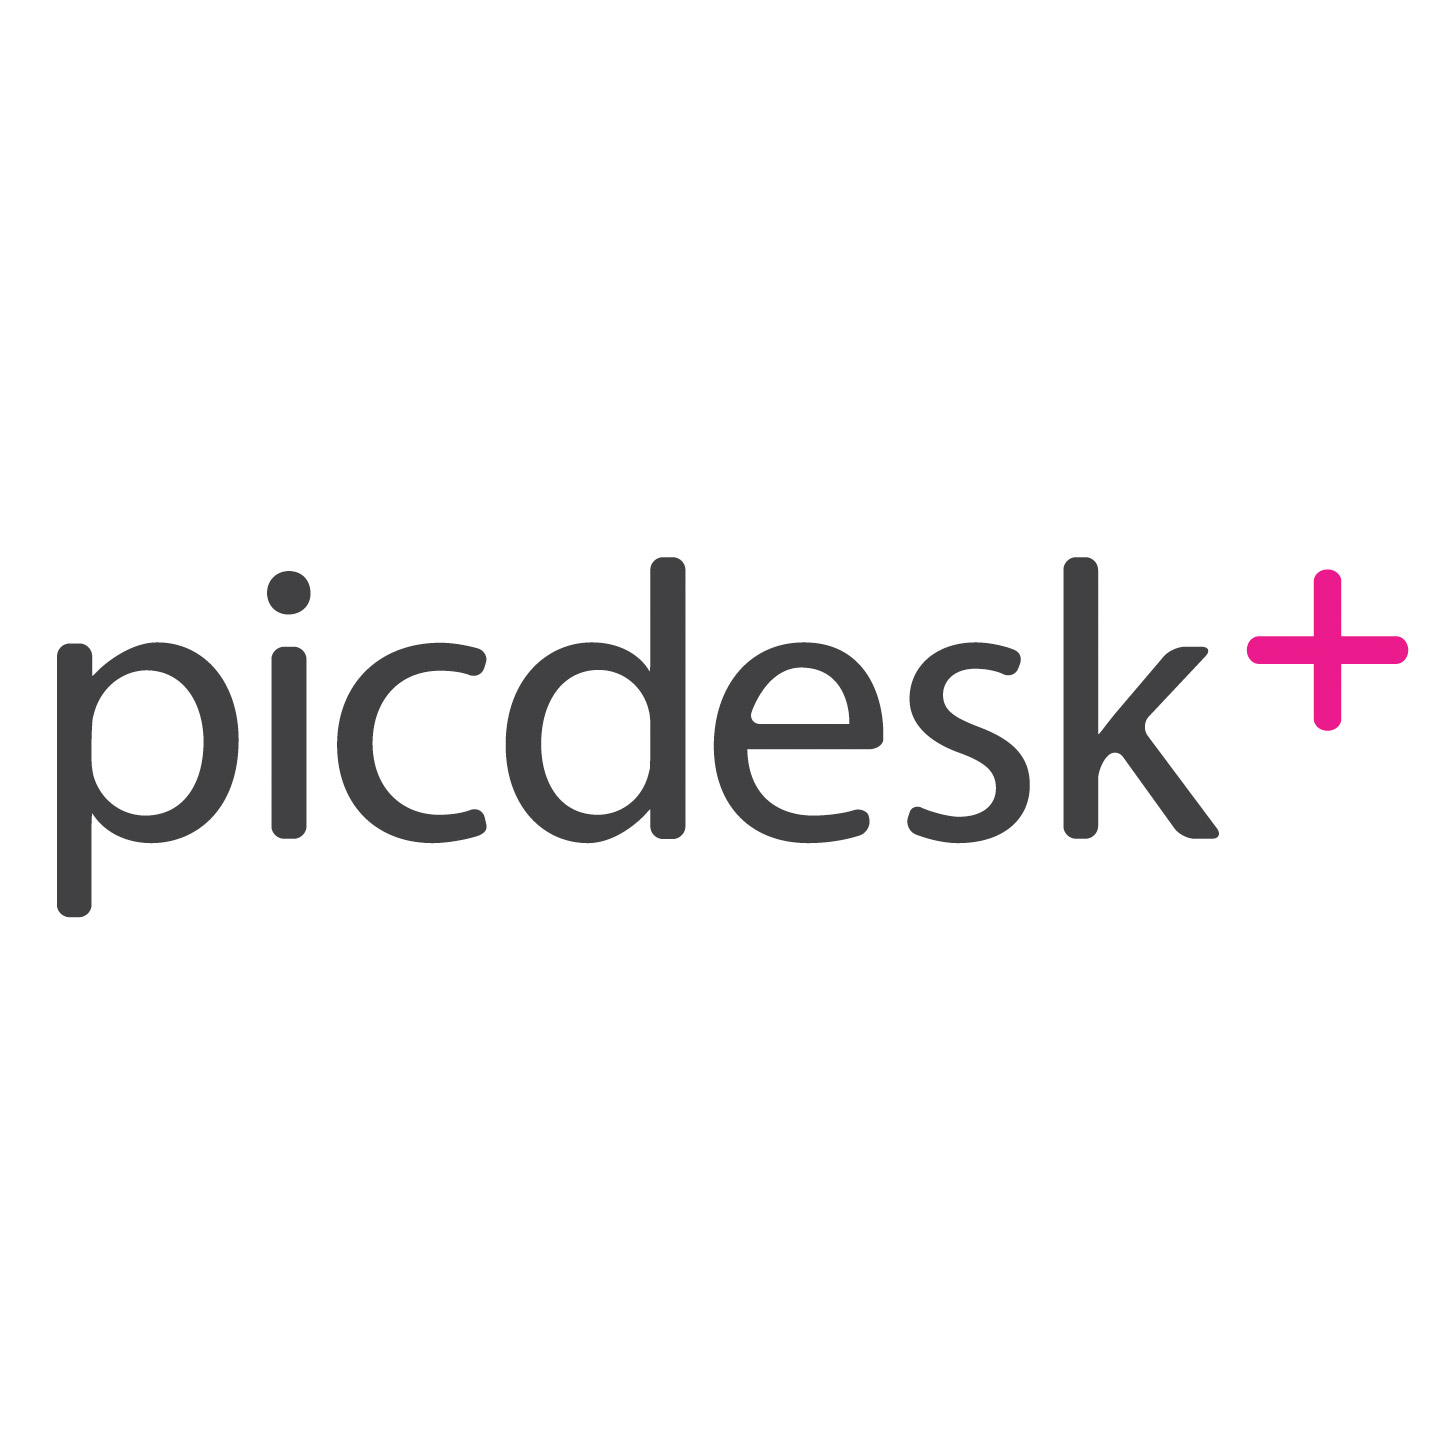 Picdesk